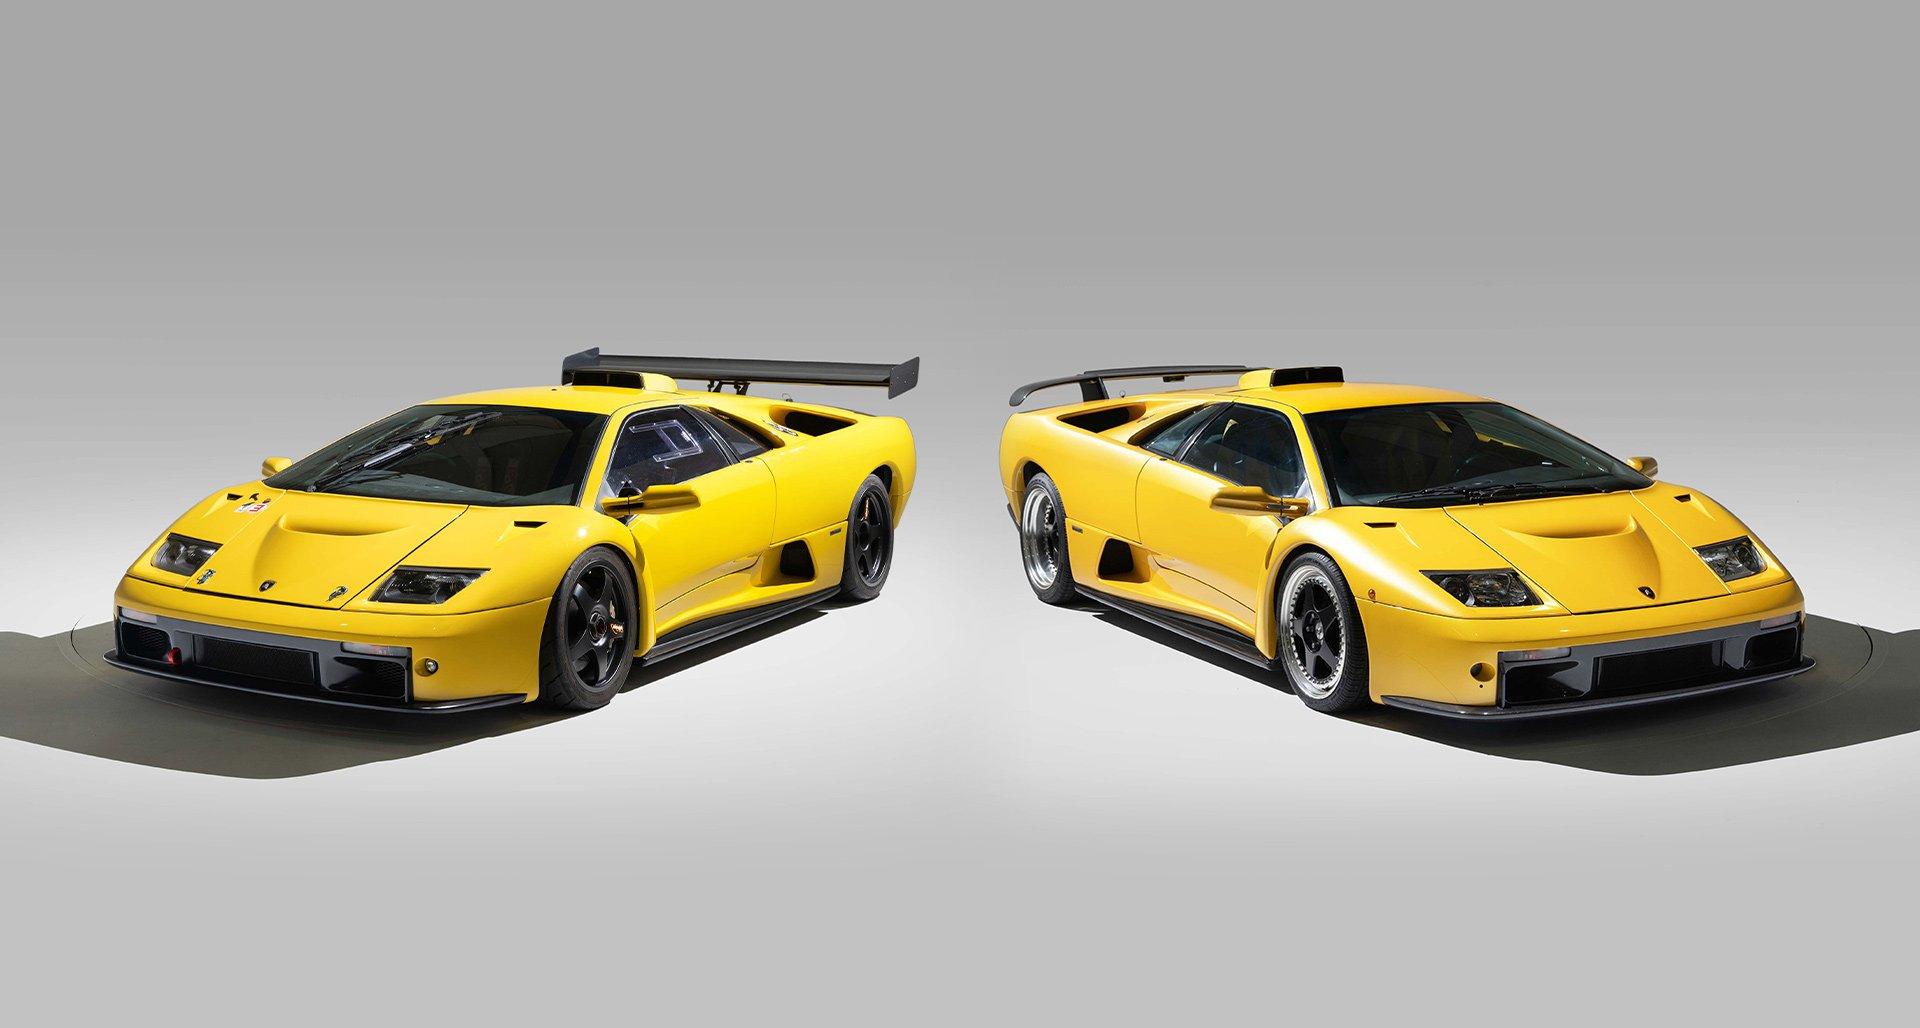 The Ultimate Two Car Garage Is A Pair Of Lamborghini Diablo Gts